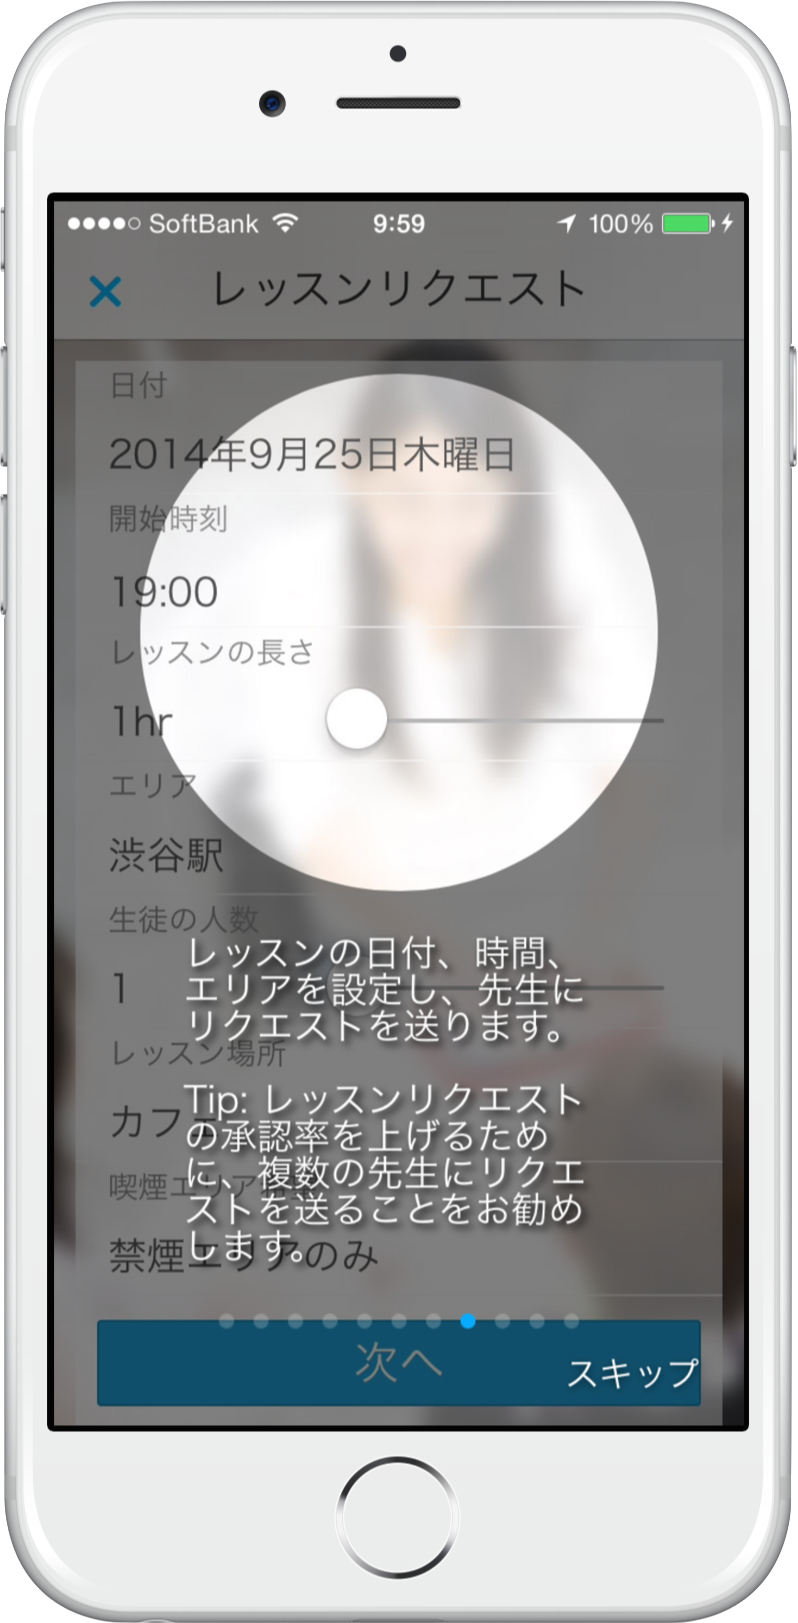 eikaiwaNOW - レッスンの流れ - JPN - 7_iphone6_silver_portrait.png